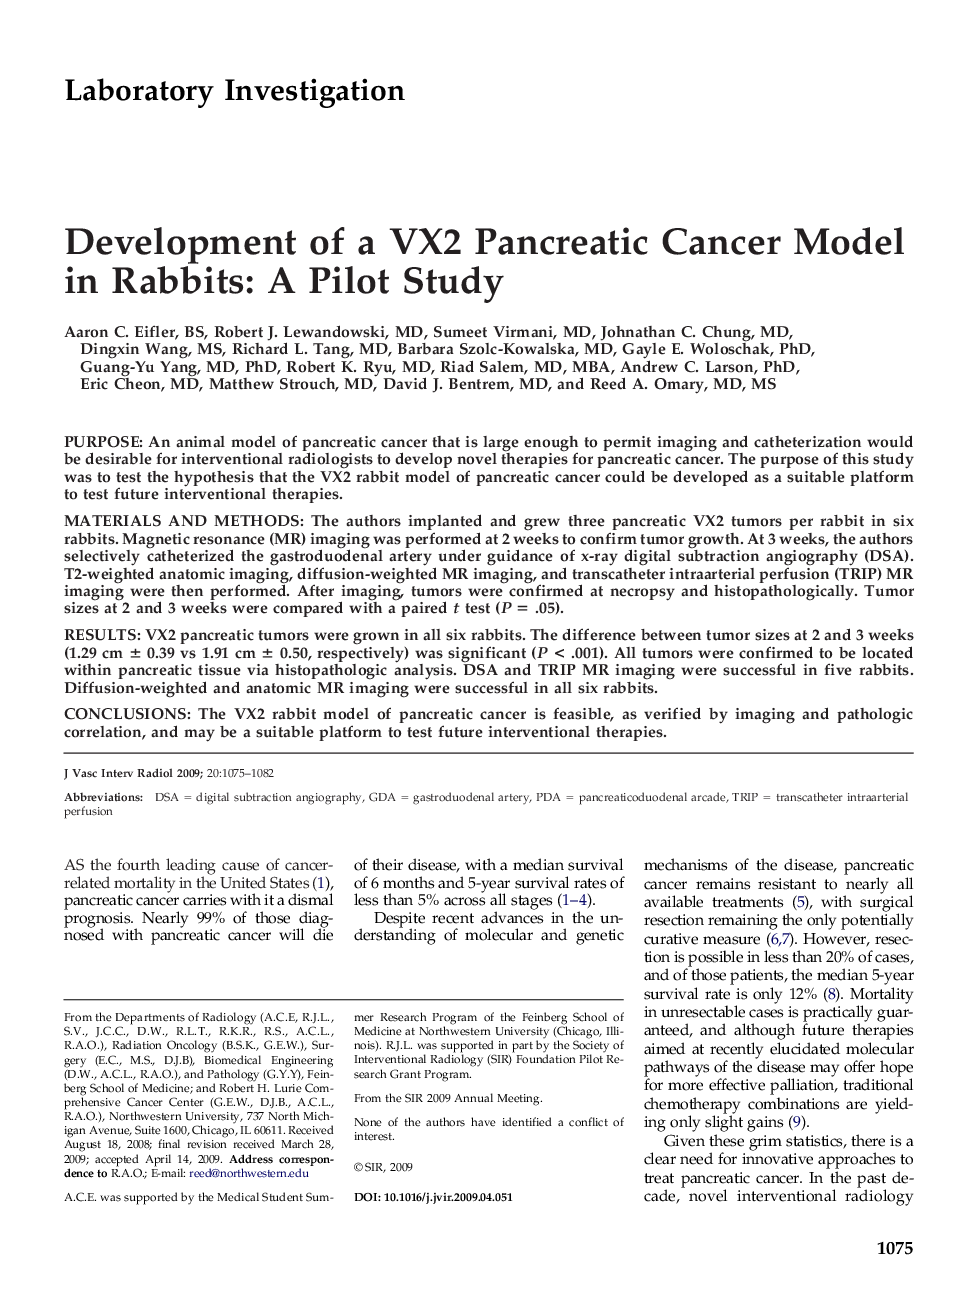 Development of a VX2 Pancreatic Cancer Model in Rabbits: A Pilot Study